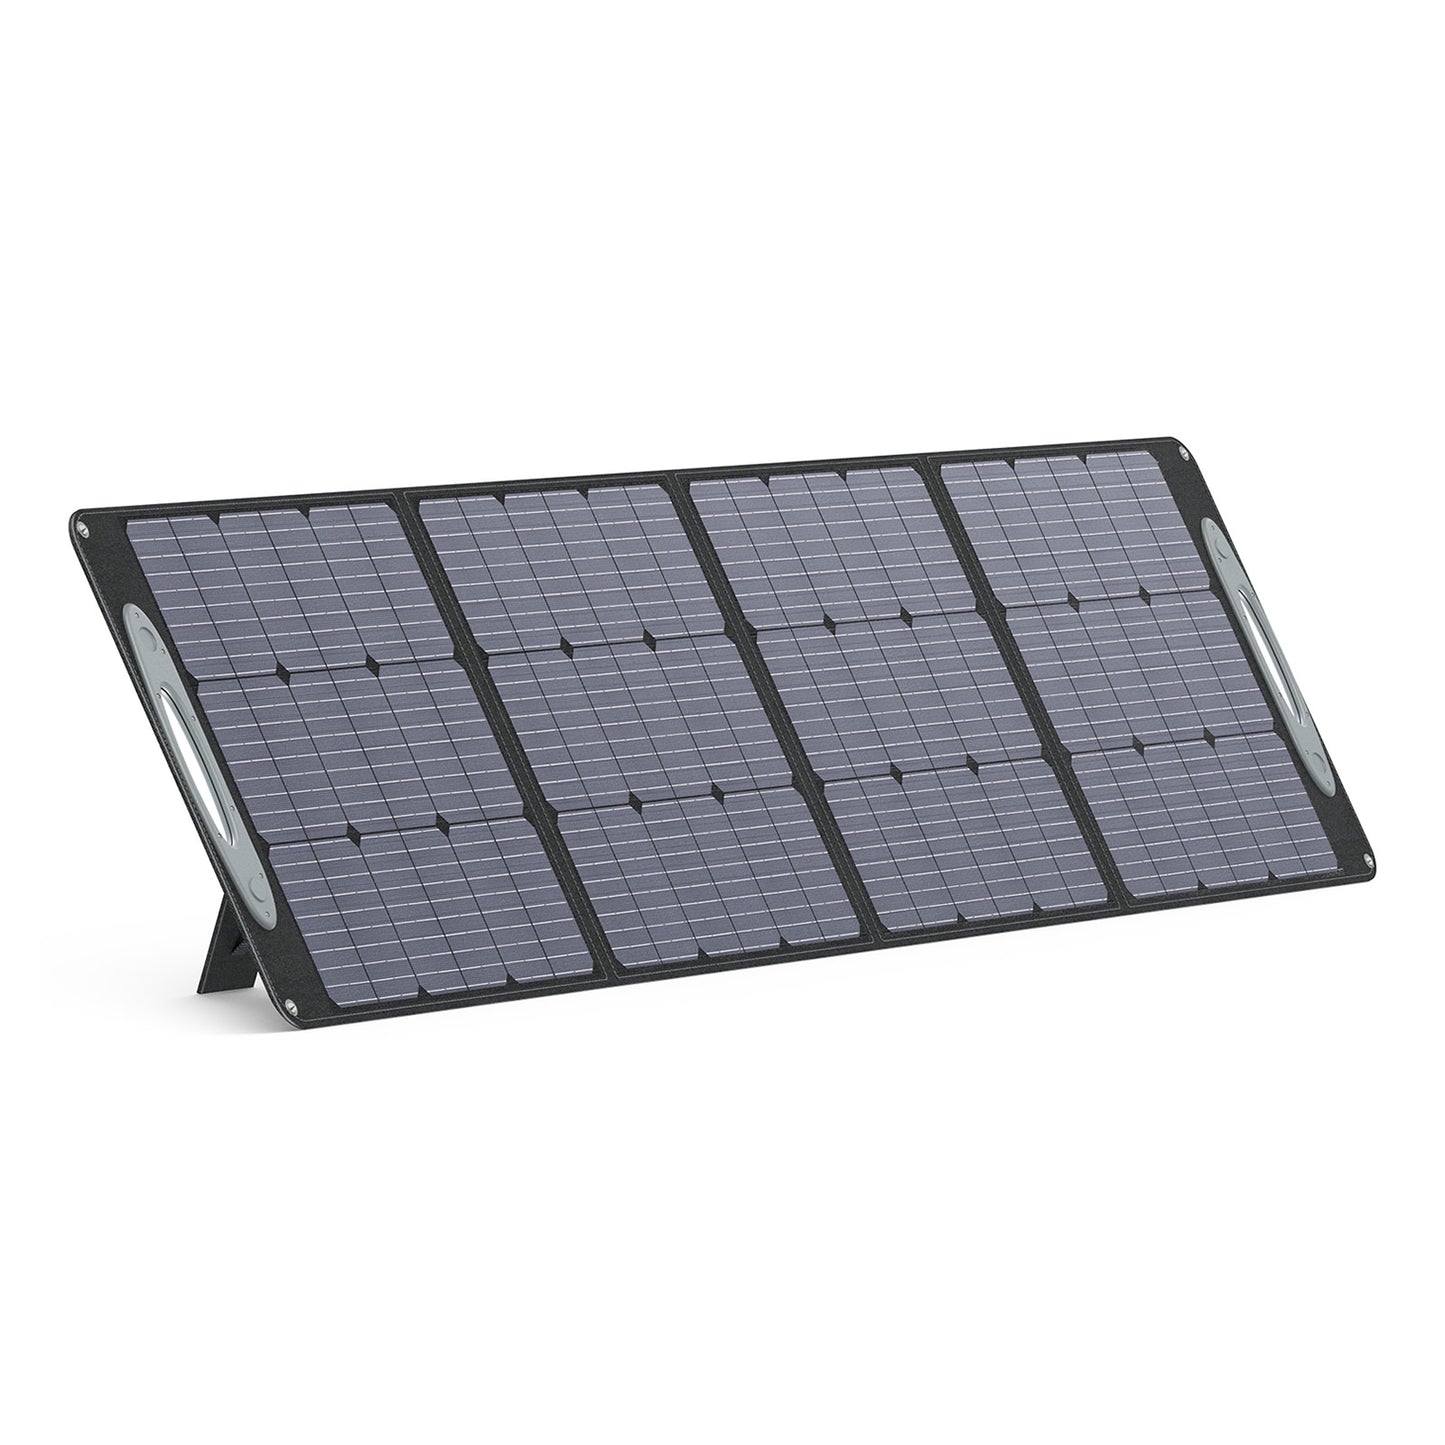 Tragbares Solarpanel 200 W 